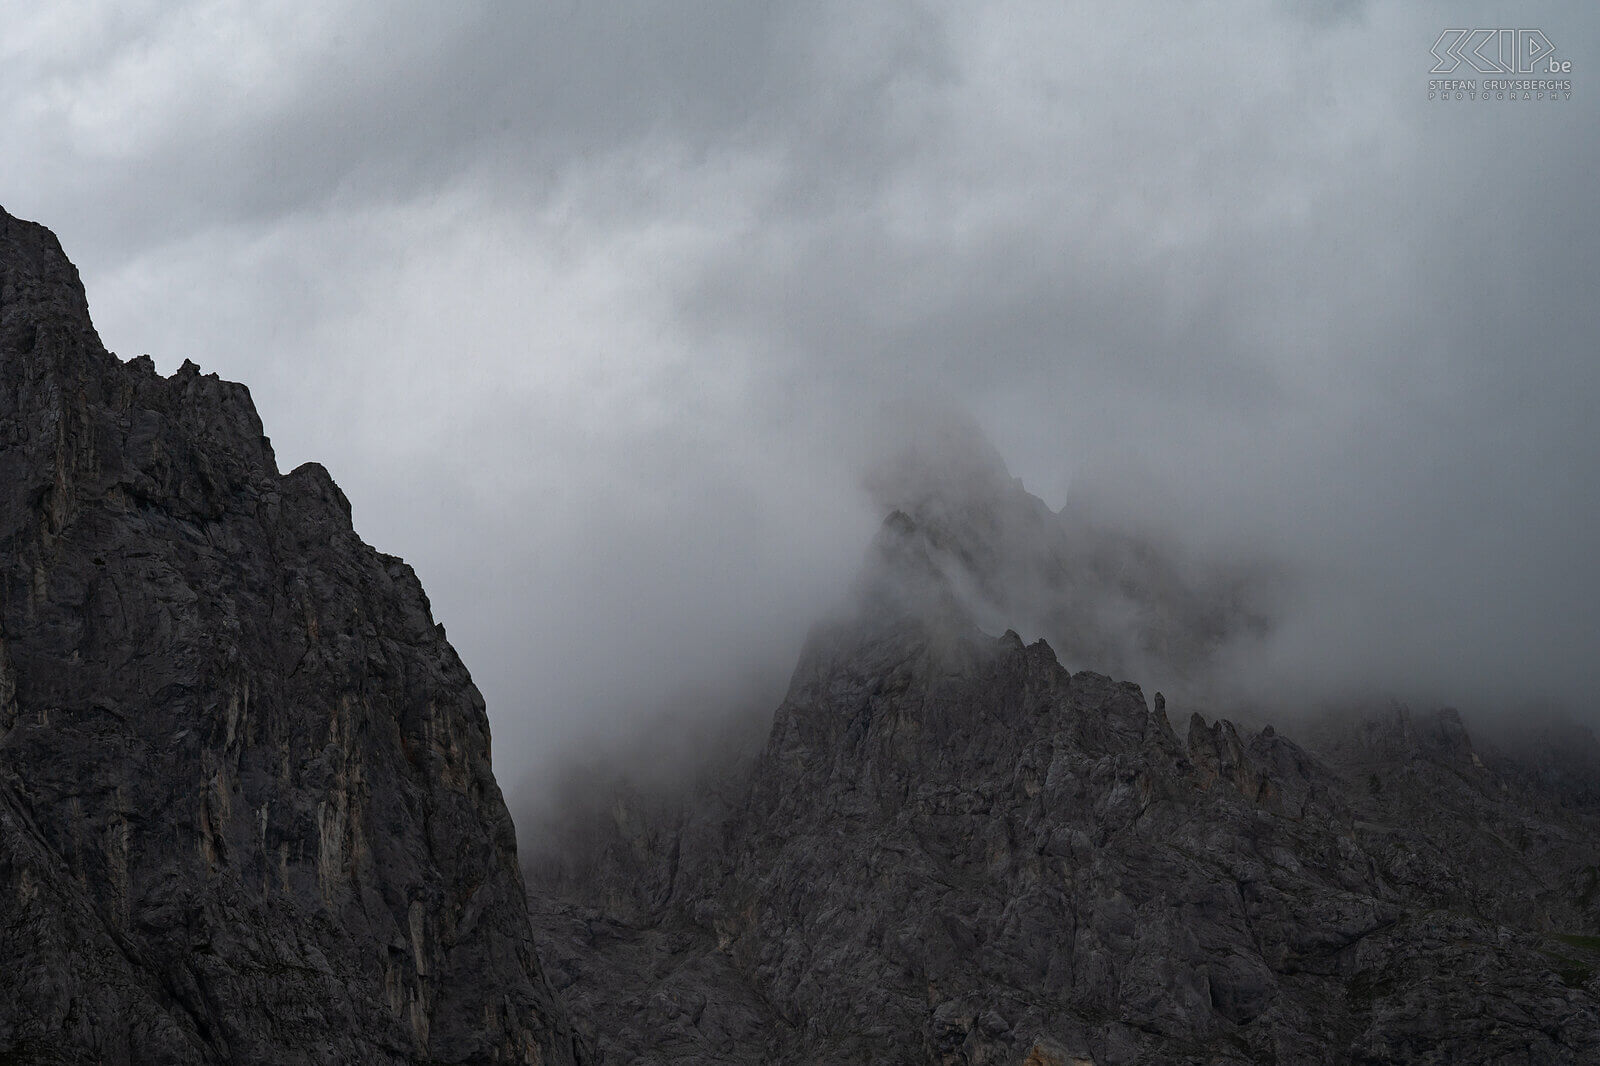 Dachstein Rocky peaks surround the Dachstein glacier at an altitude of 2700m Stefan Cruysberghs